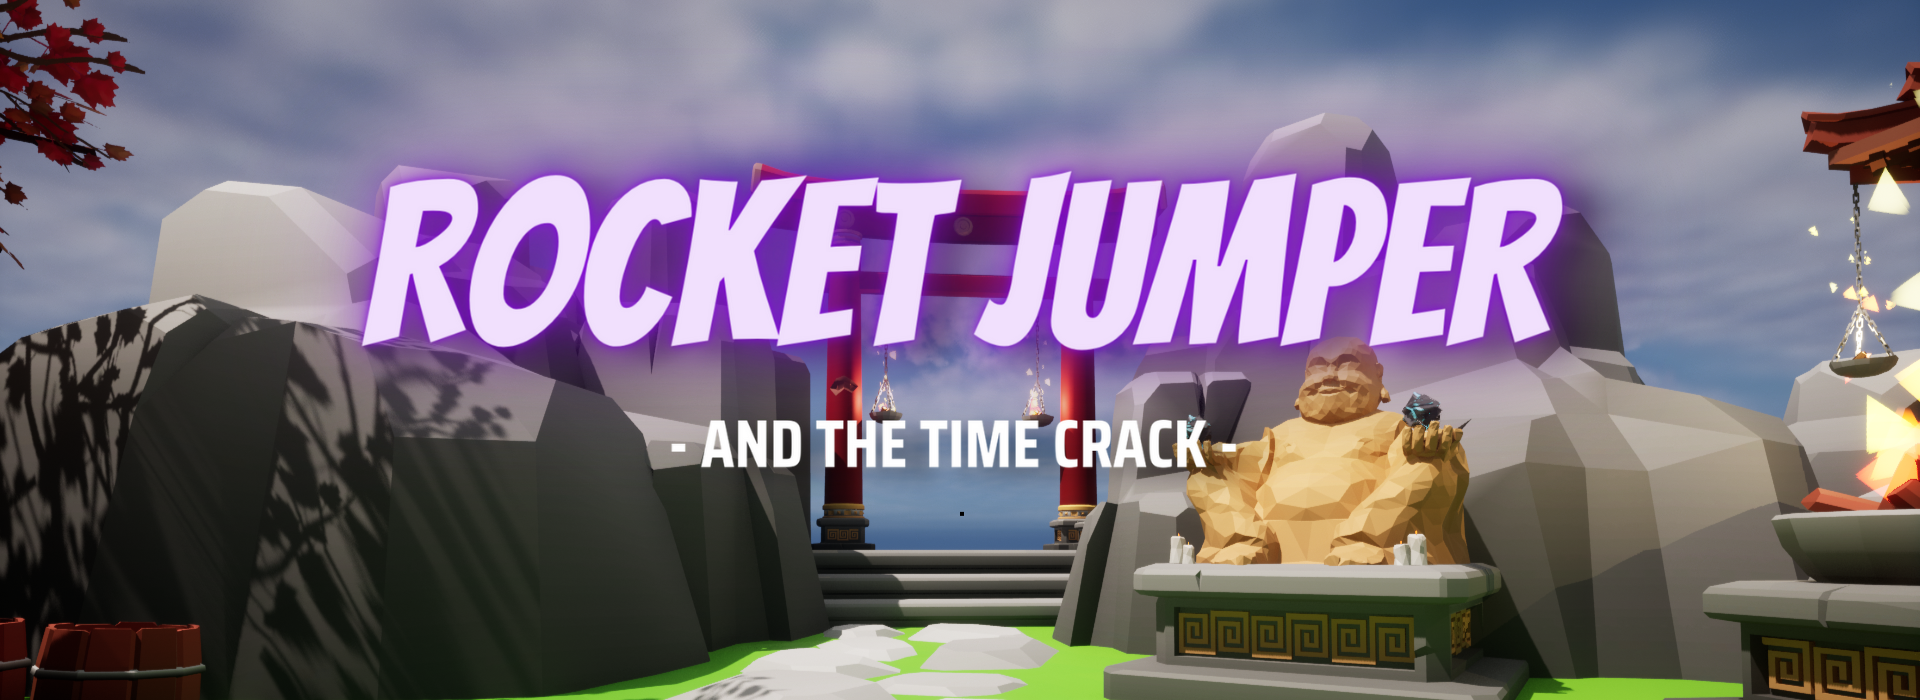 Rocket Jumper and the Time Crack